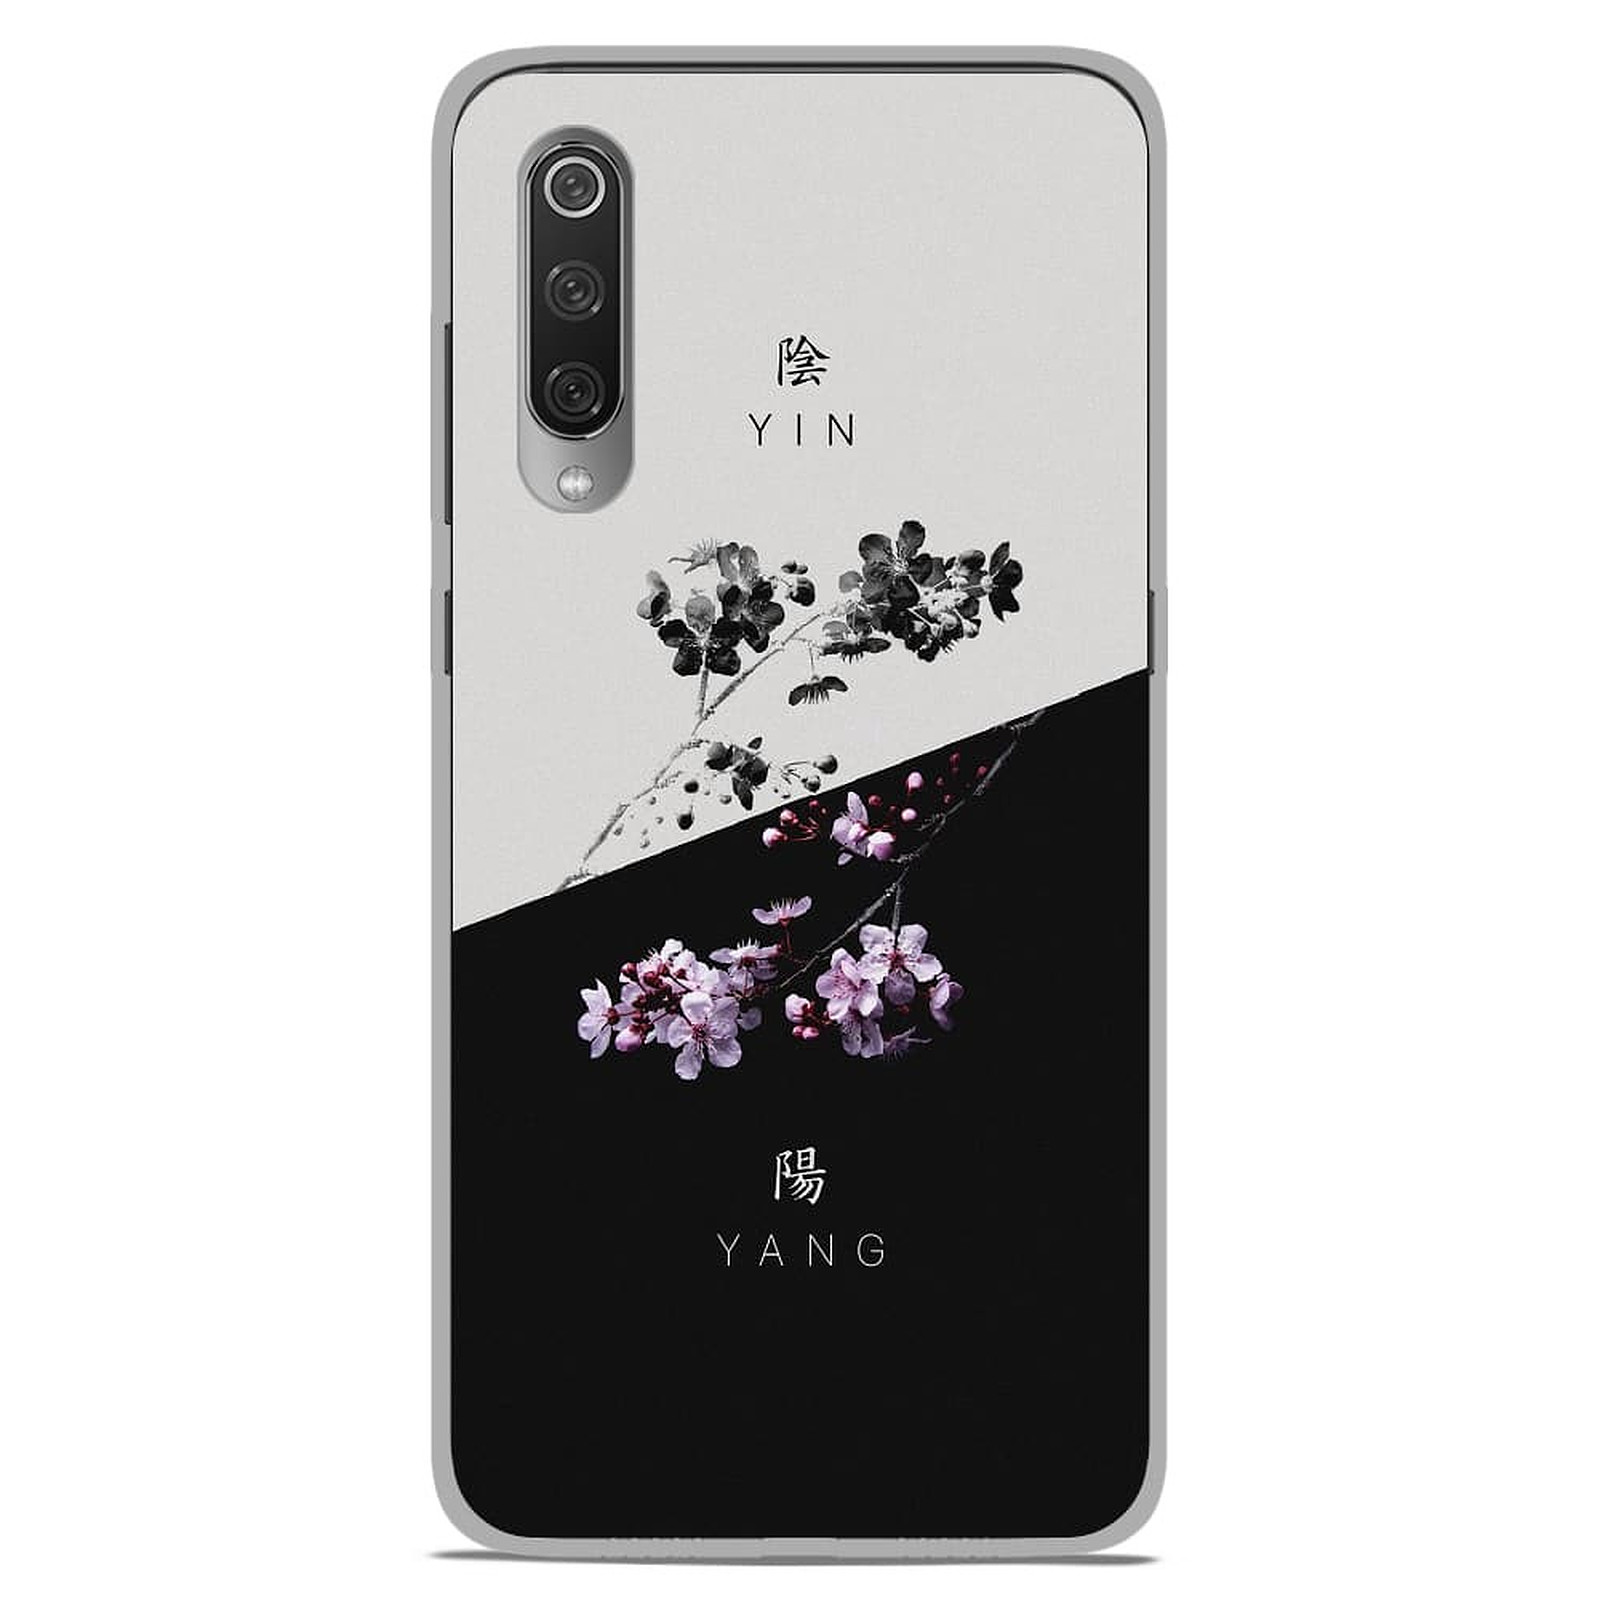 1001 Coques Coque silicone gel Xiaomi Mi 9 / Mi 9 Pro motif Yin et Yang - Coque telephone 1001Coques